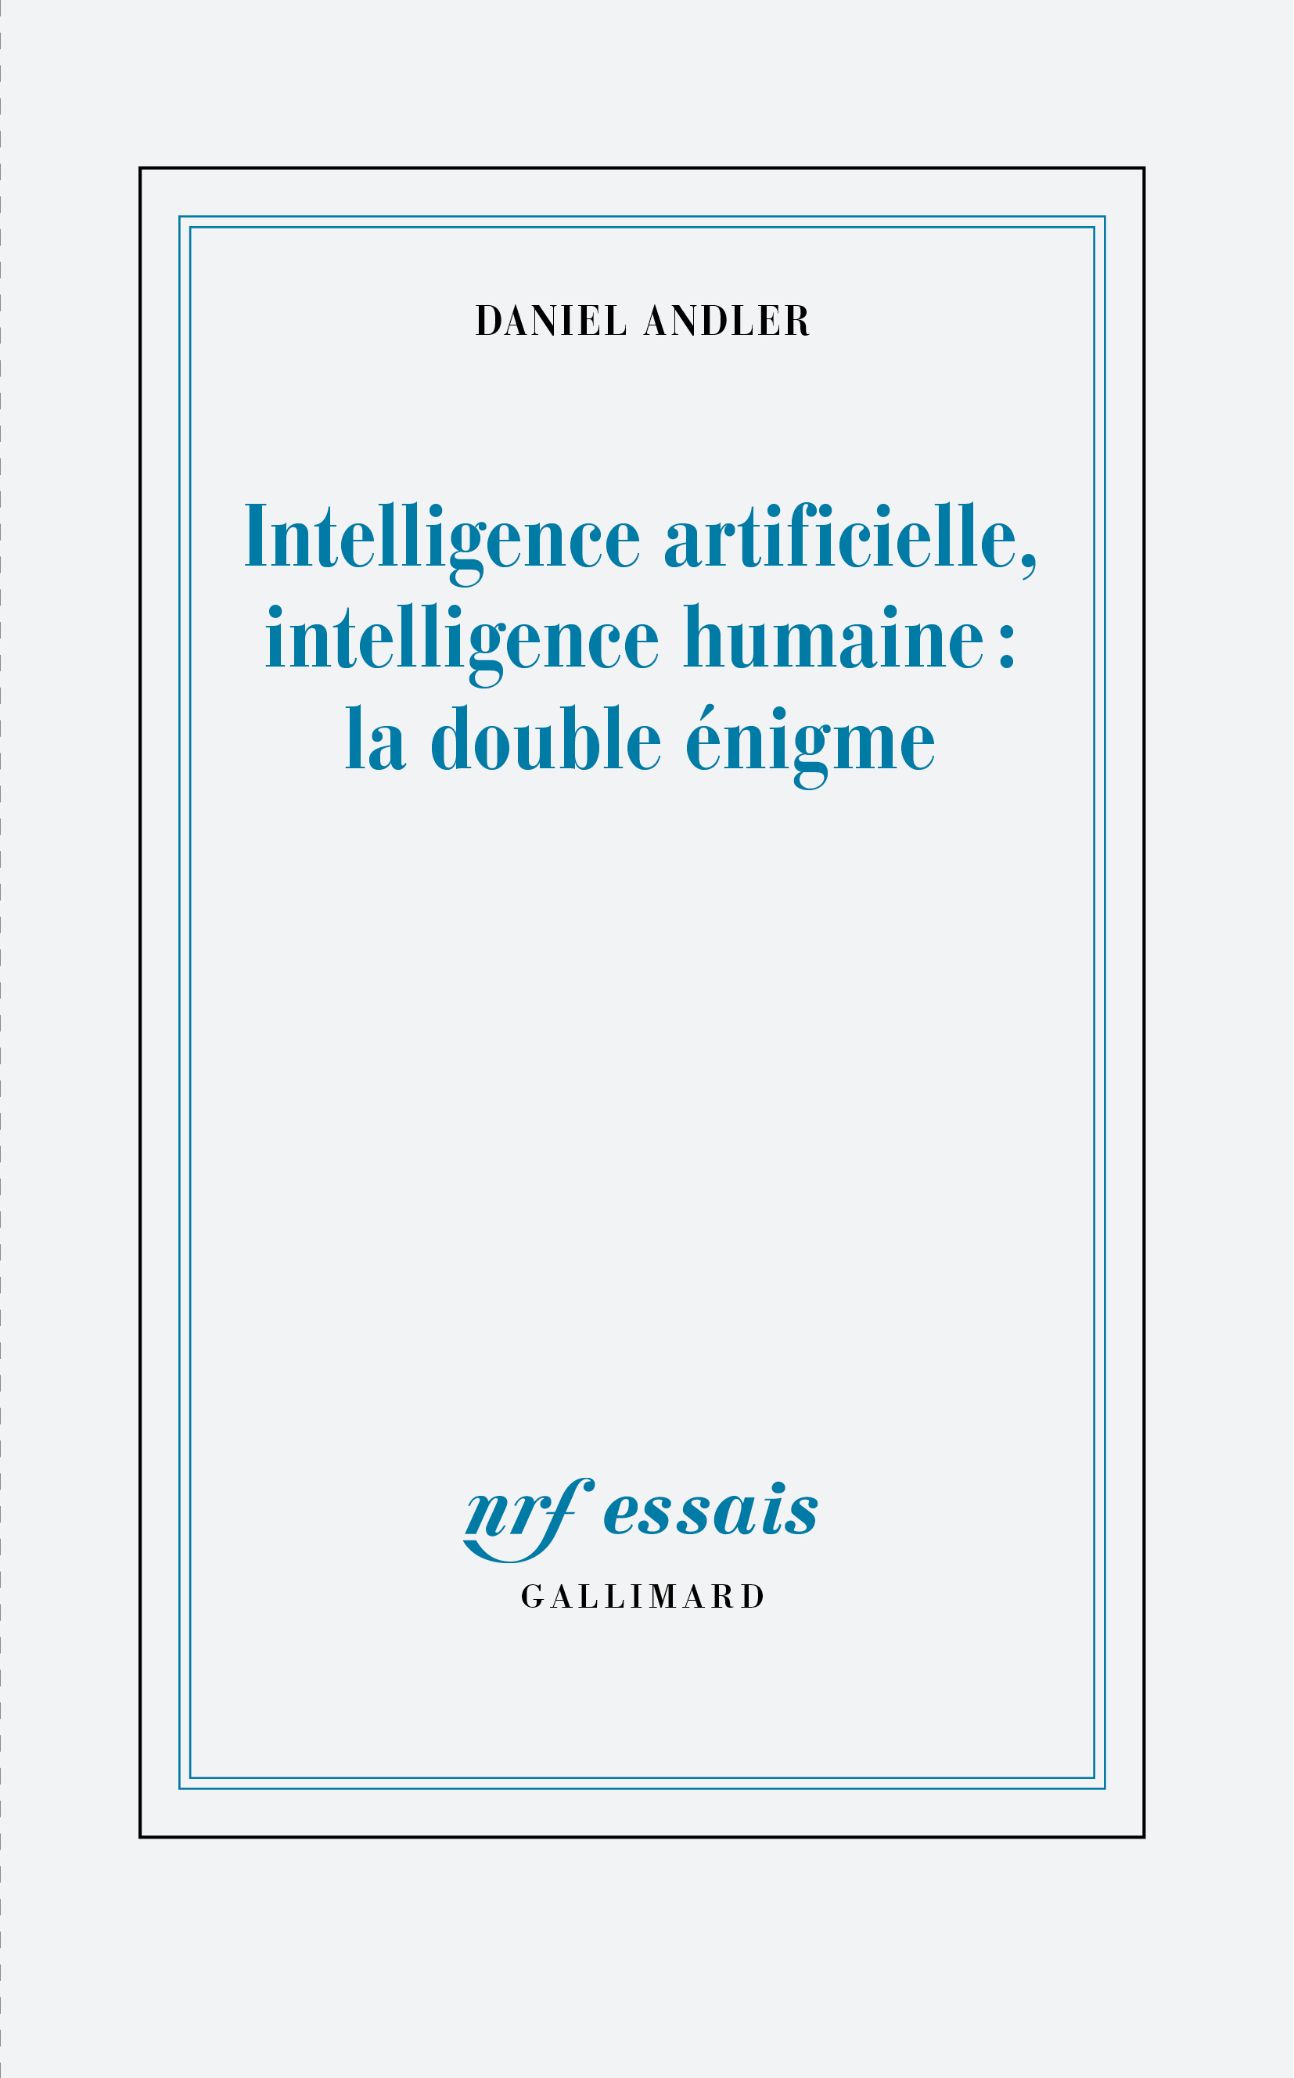 Daniel Andler, Intelligence artificielle, intelligence humaine : la double énigme